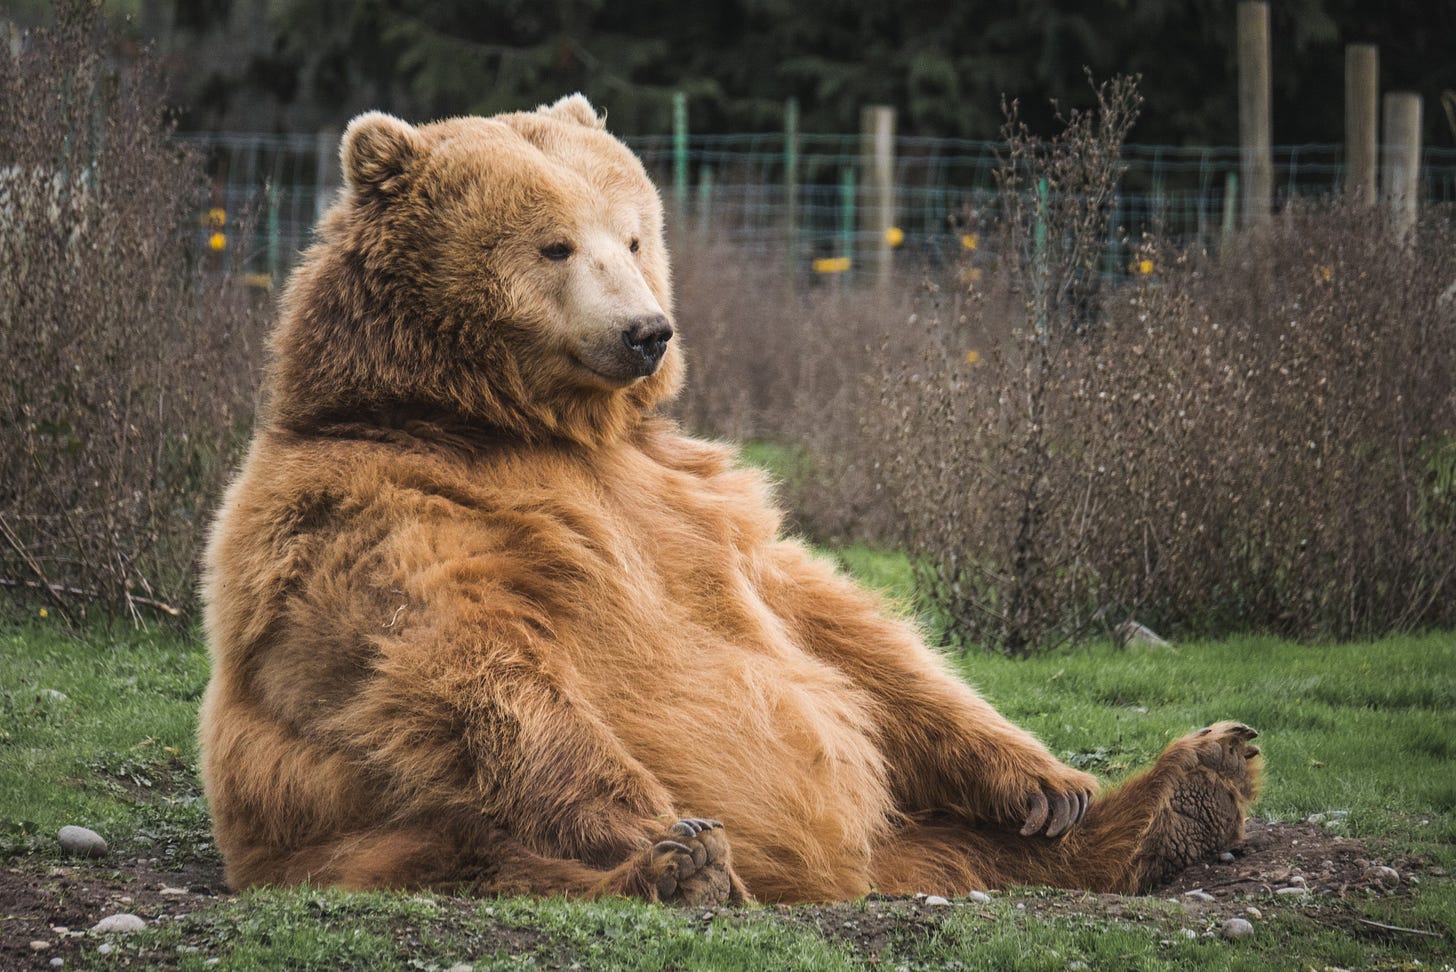 A large bear sitting